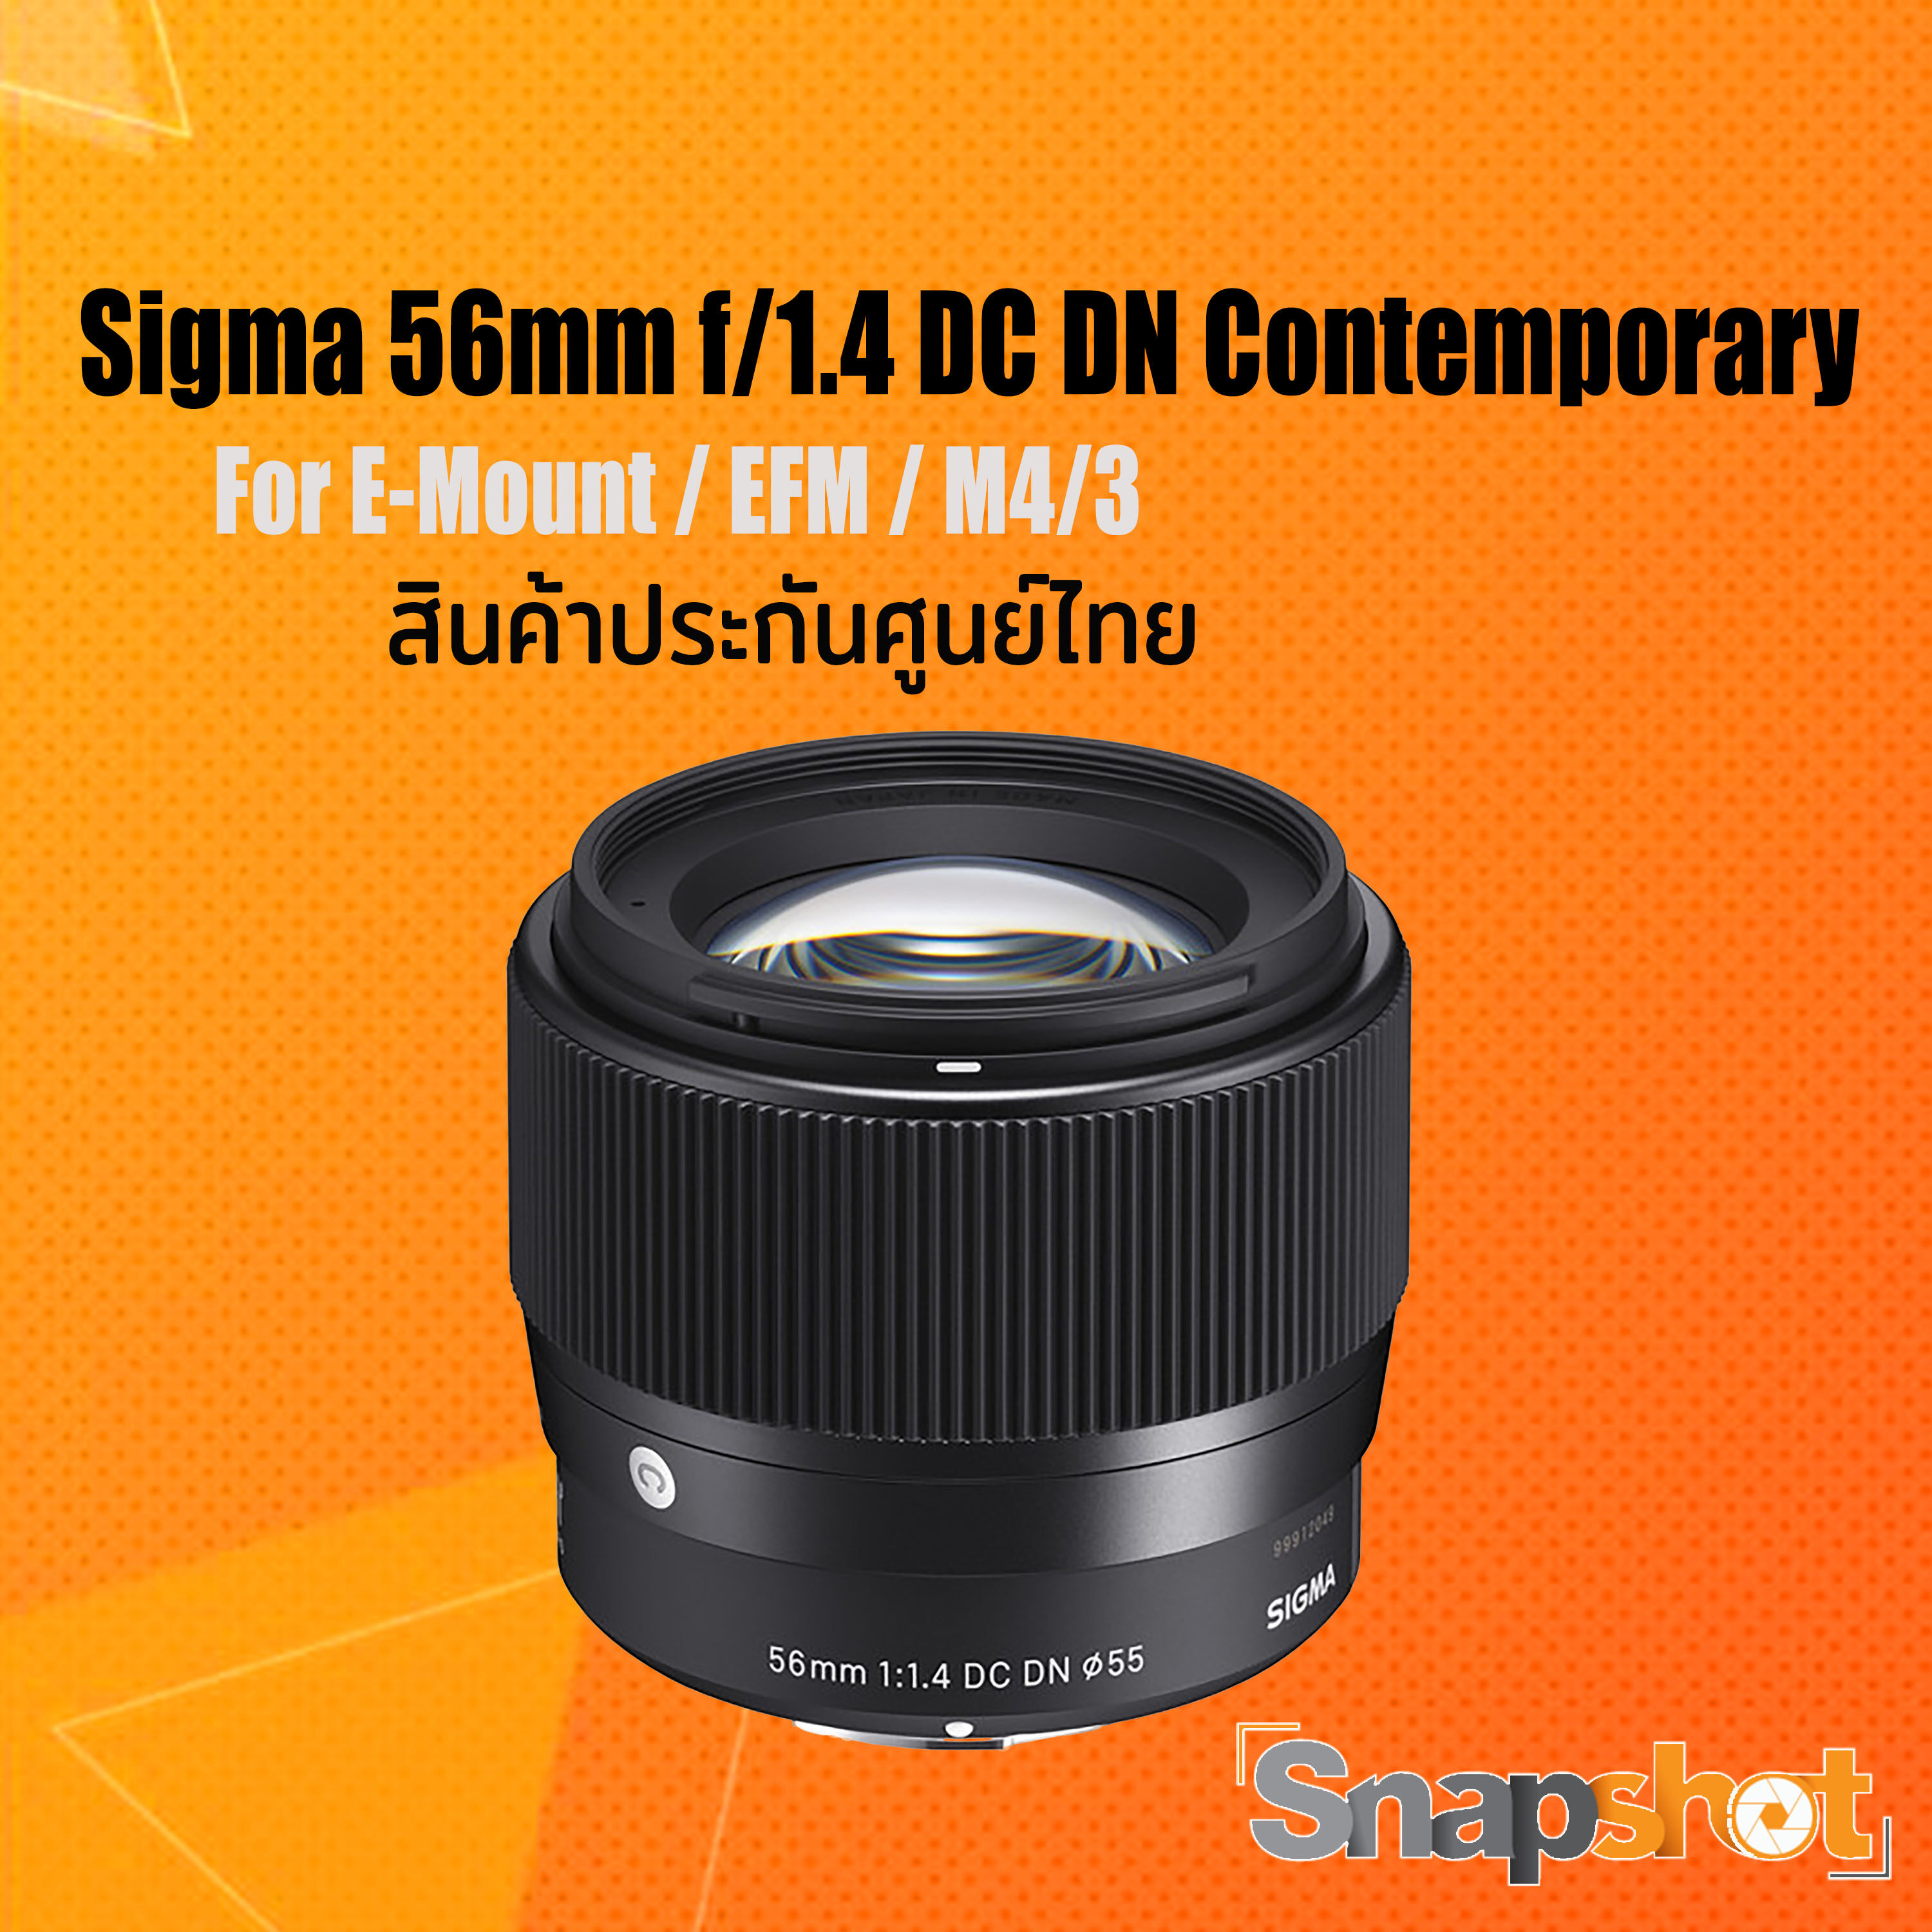 Sigma 56mm f/1.4 DC DN Contemporary for E-Mount / EFM /M43 ( ประกันศูนย์ไทย )